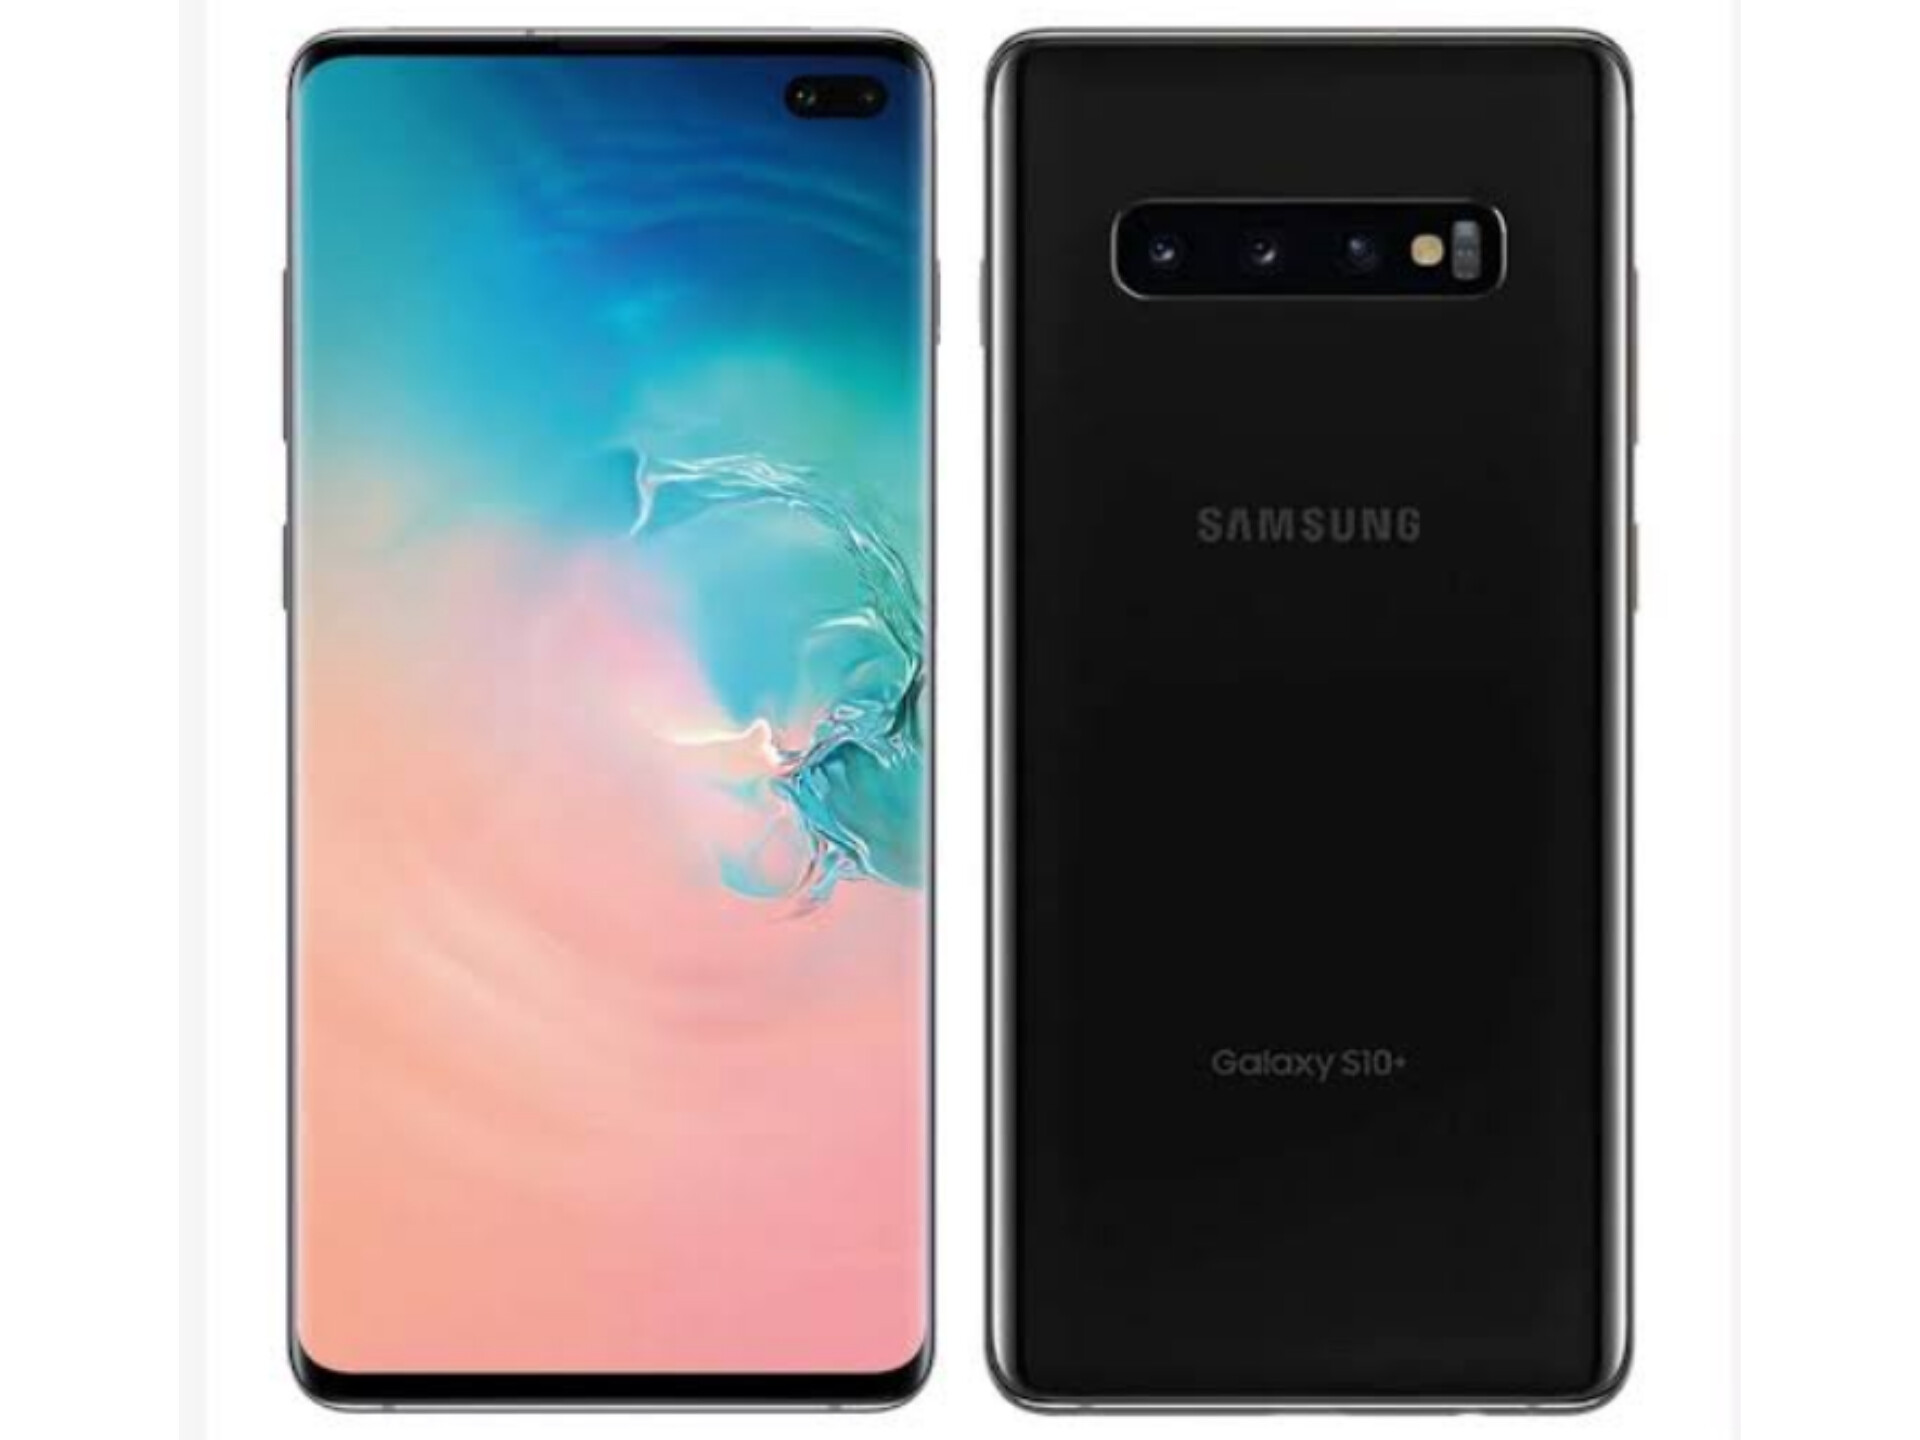 Samsung Galaxy S10 Plus Dibekali Teknologi Layar Infinity-O AMOLED dan Sensor Fingerprint In-Display